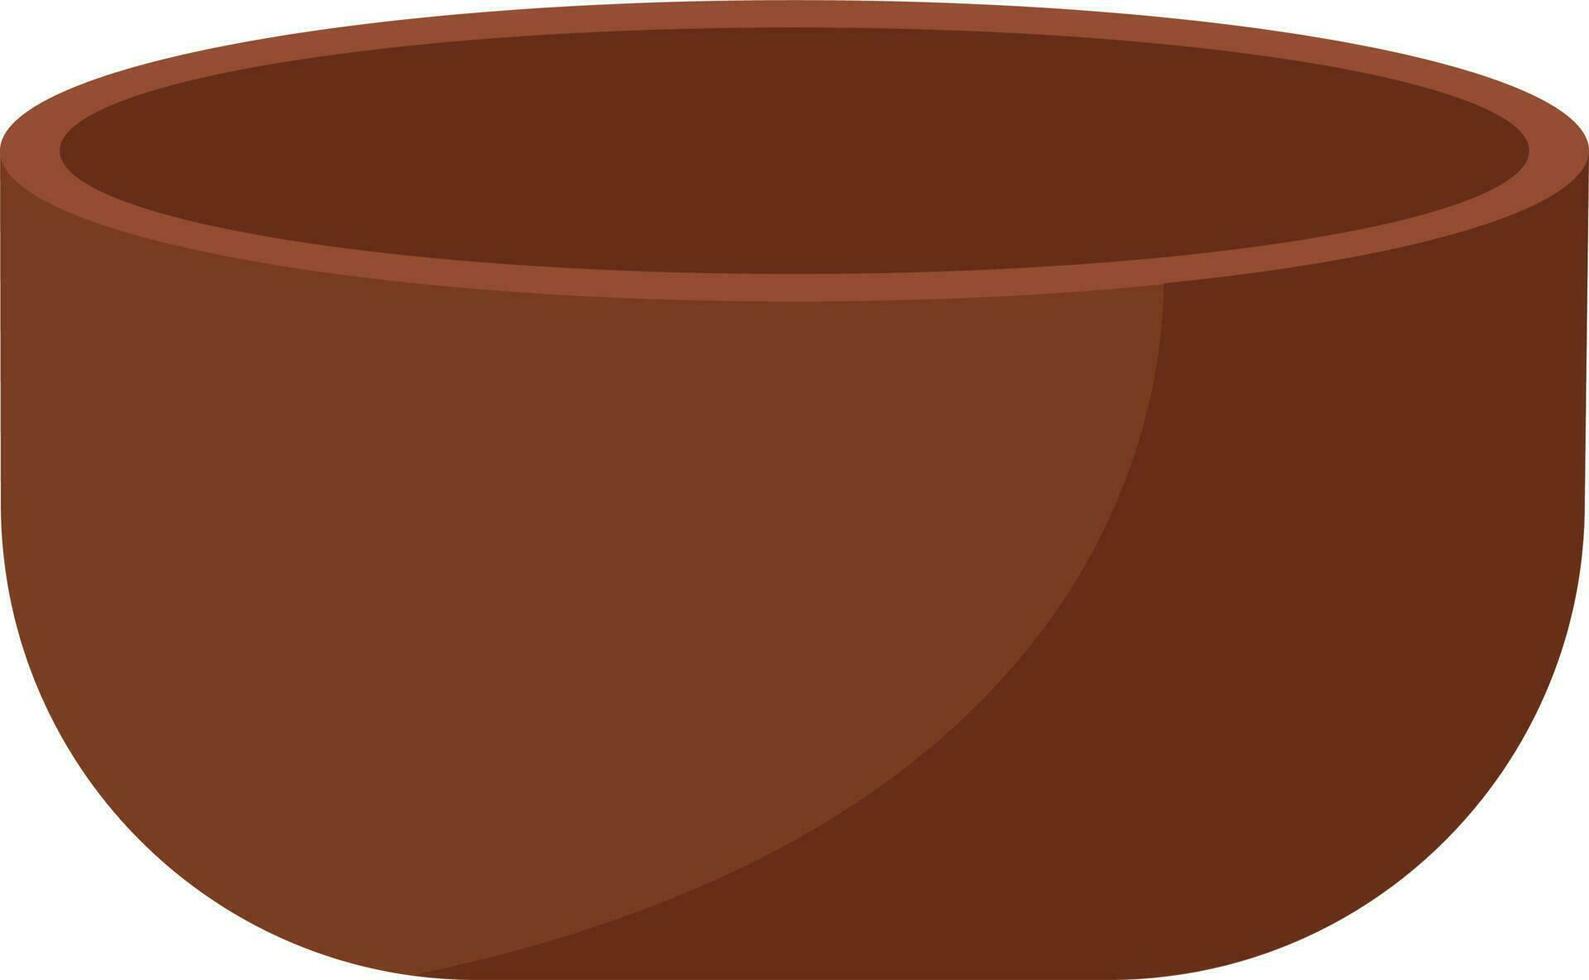 a bowl brown illustration color vector